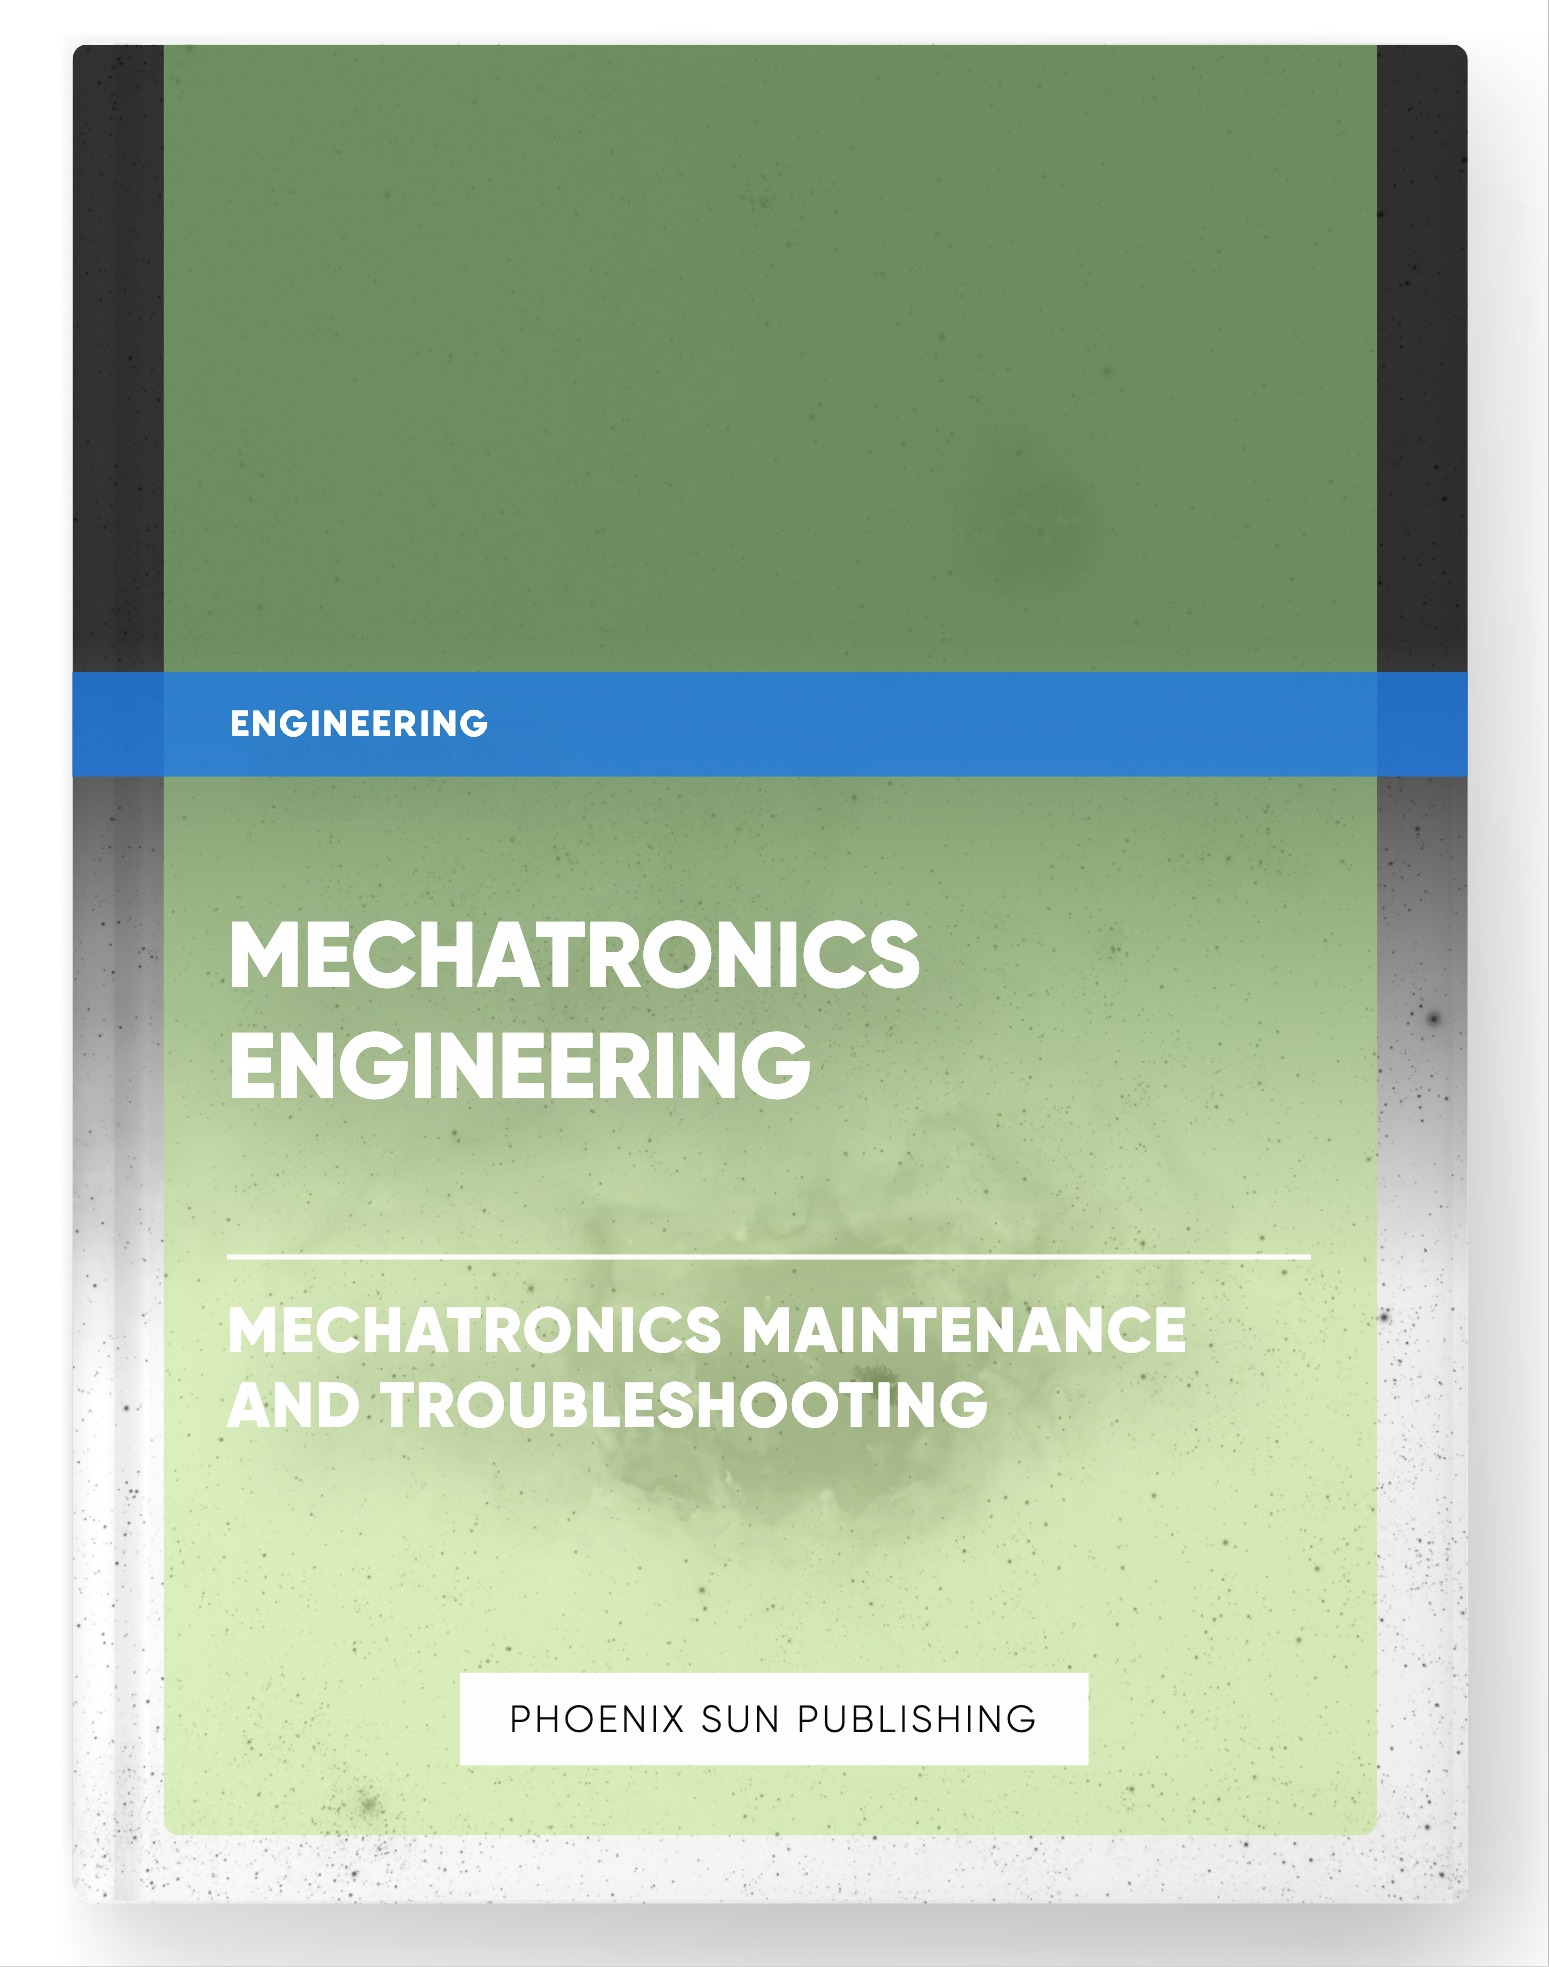 Mechatronics Engineering – Mechatronics Maintenance and Troubleshooting